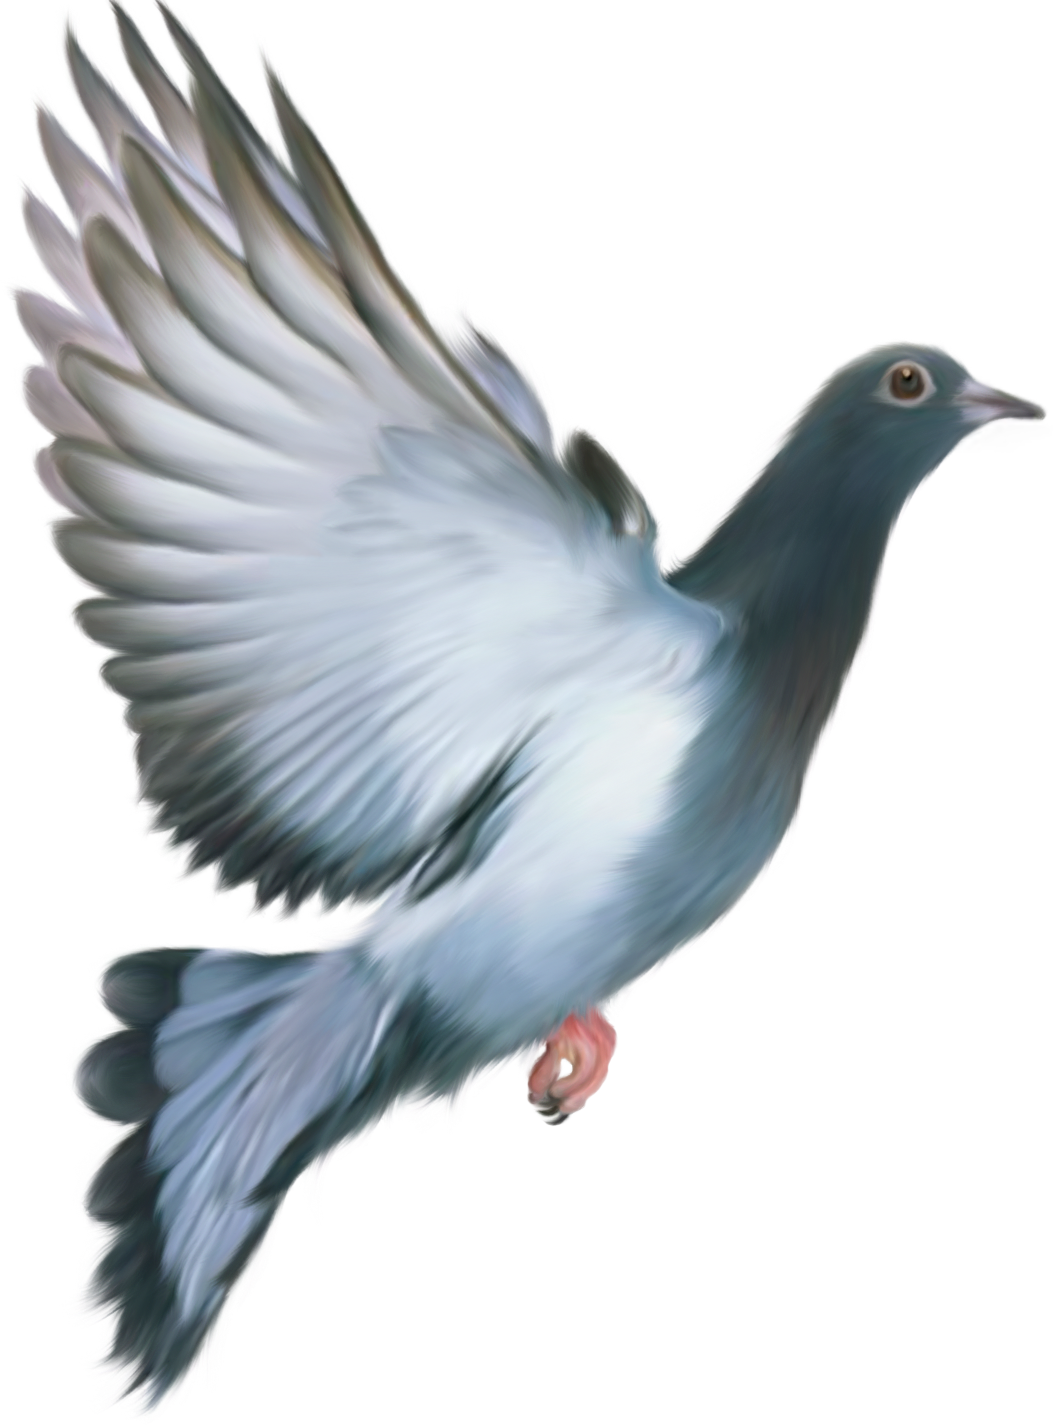 Image - Animasi Bergerak Burung Merpati (1053x1425)